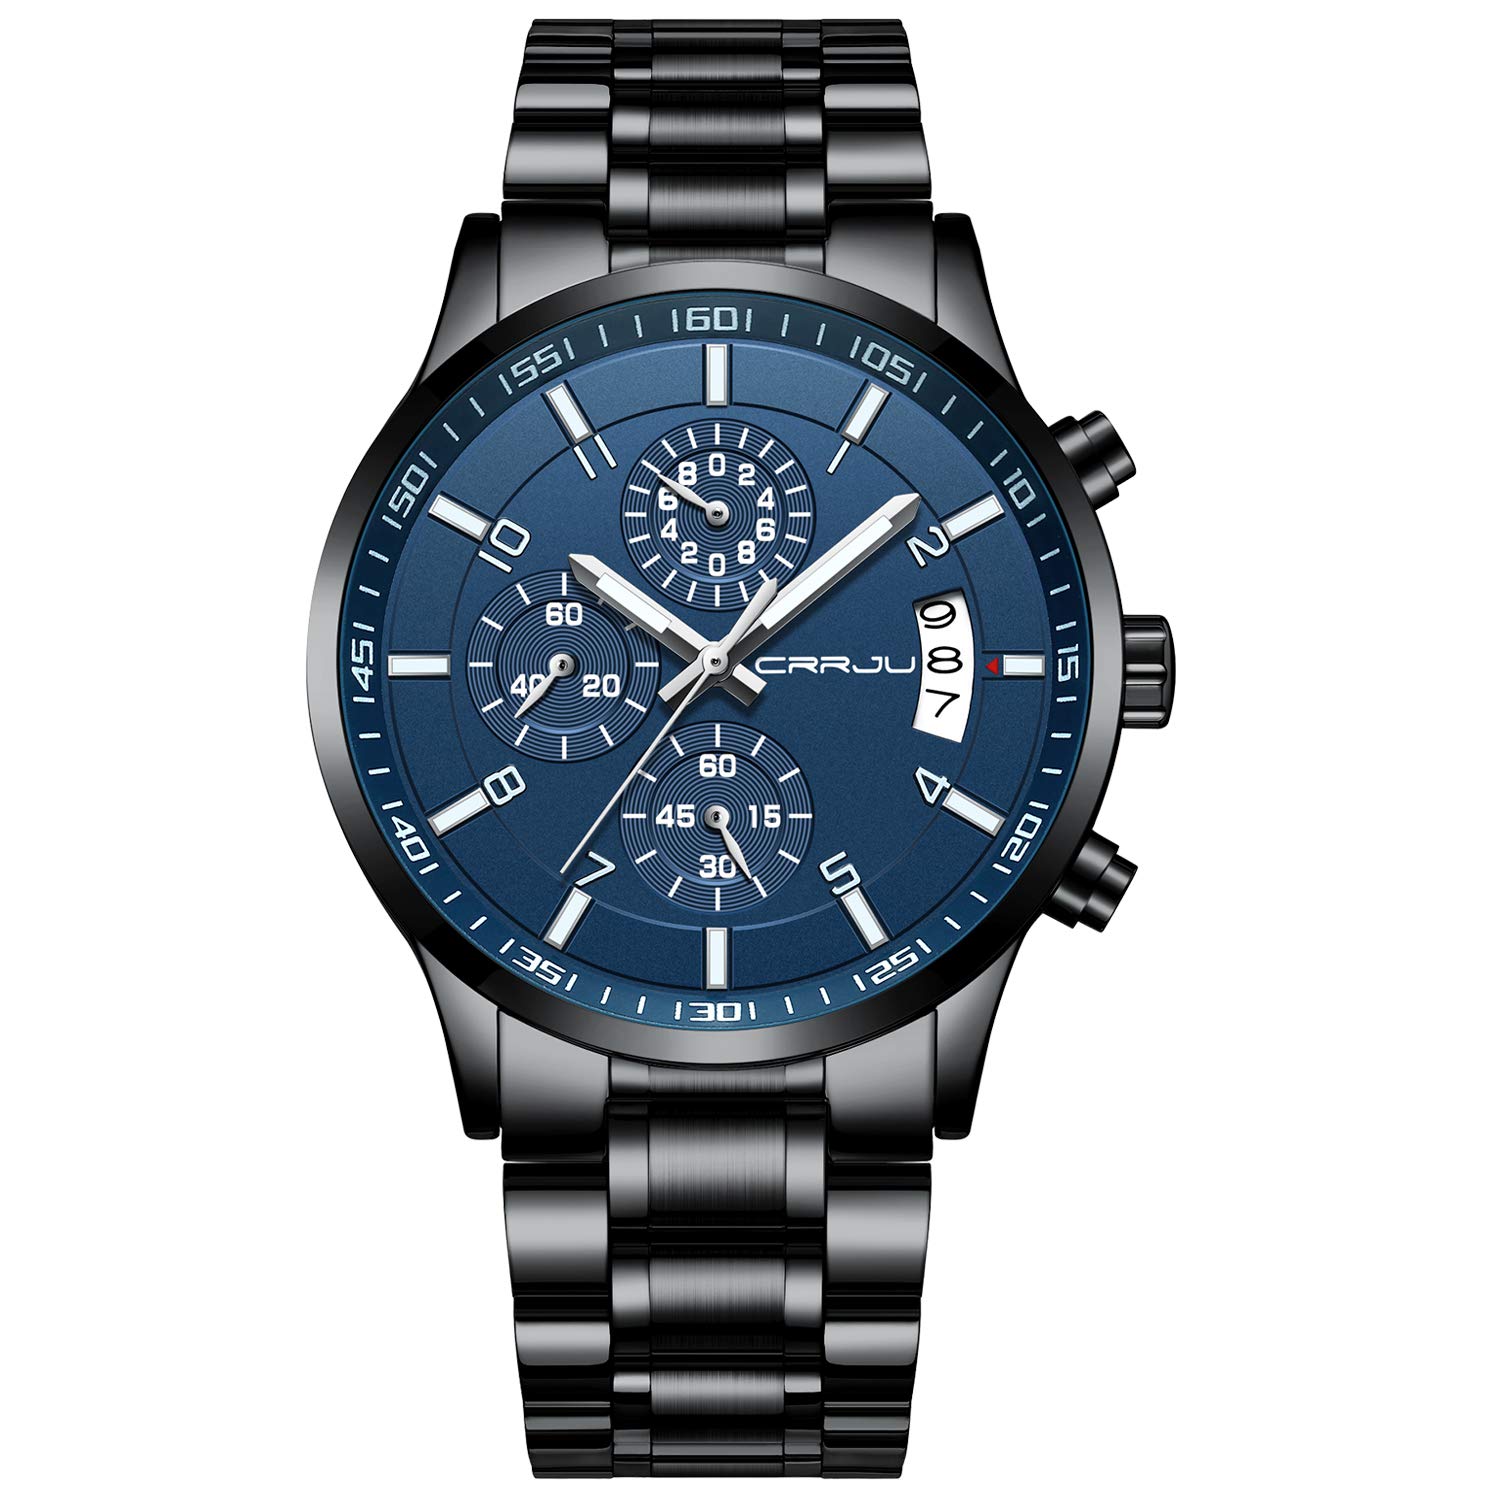 CRRJU Mens Watches Fashion Casual Quartz Analog Black Stainless Steel Waterproof Chronograph Wrist Watch for Men並行輸入